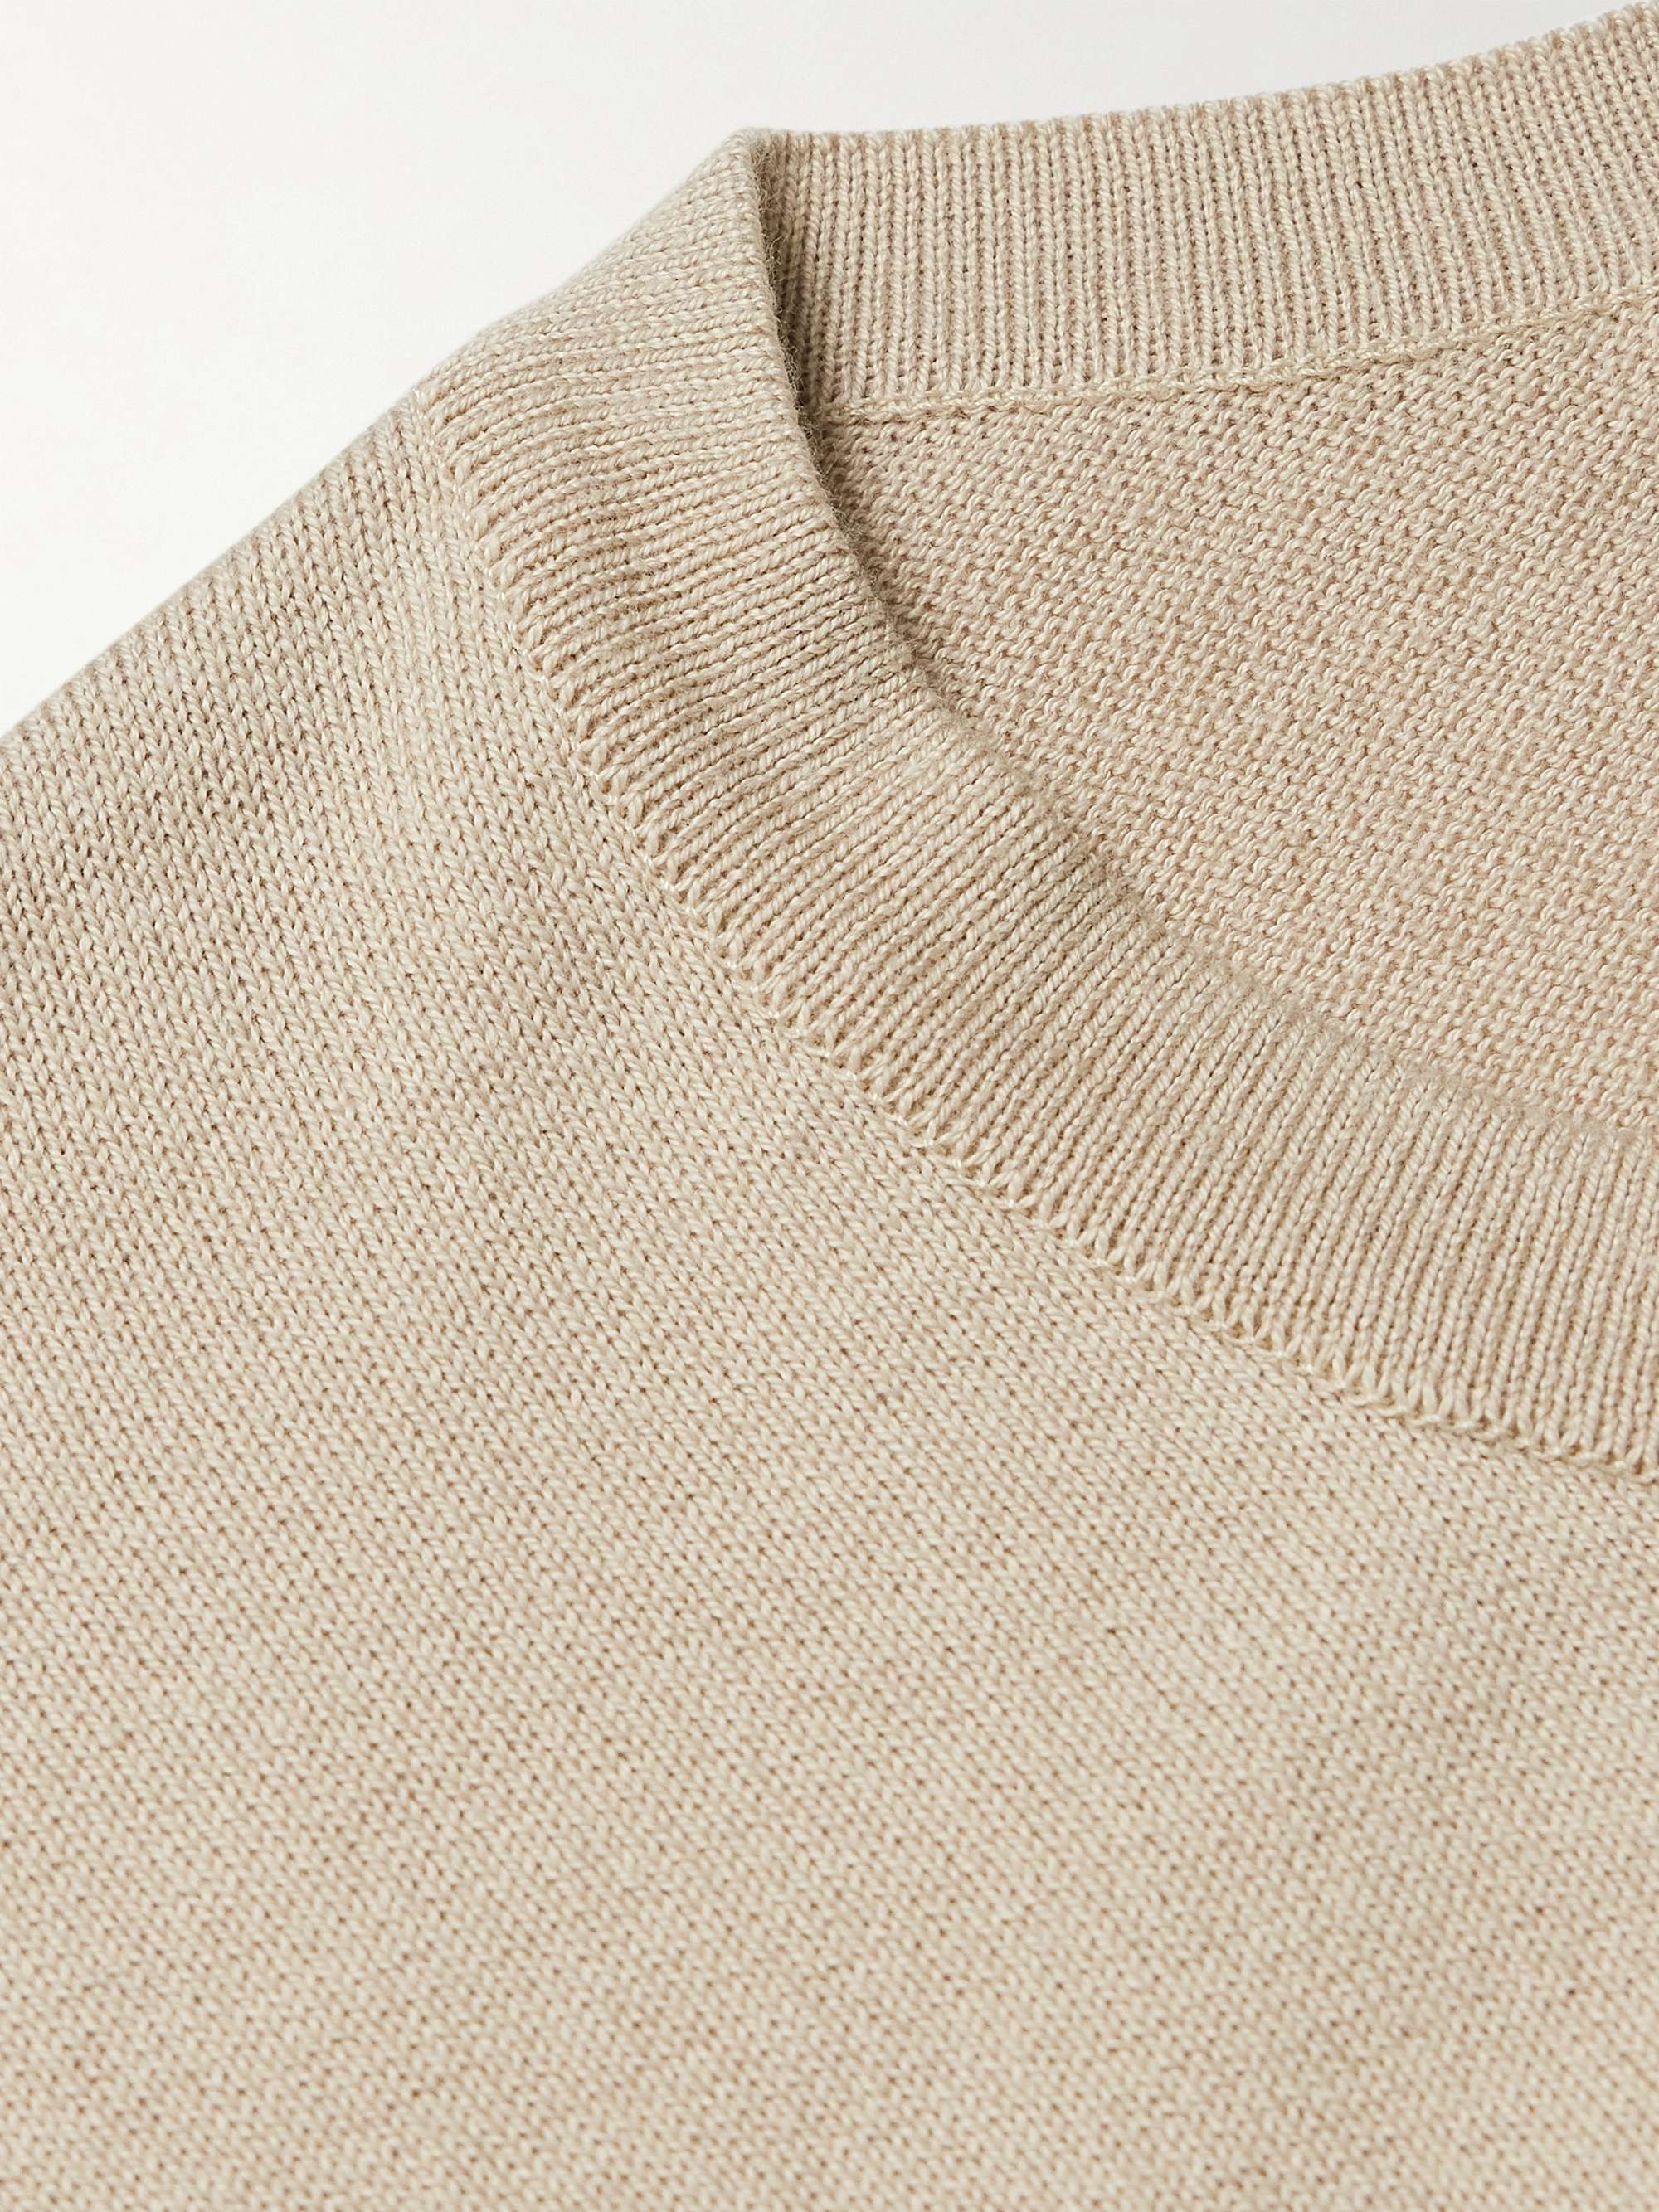 JOHN SMEDLEY Tate Sea Island Cotton Sweater for Men | MR PORTER